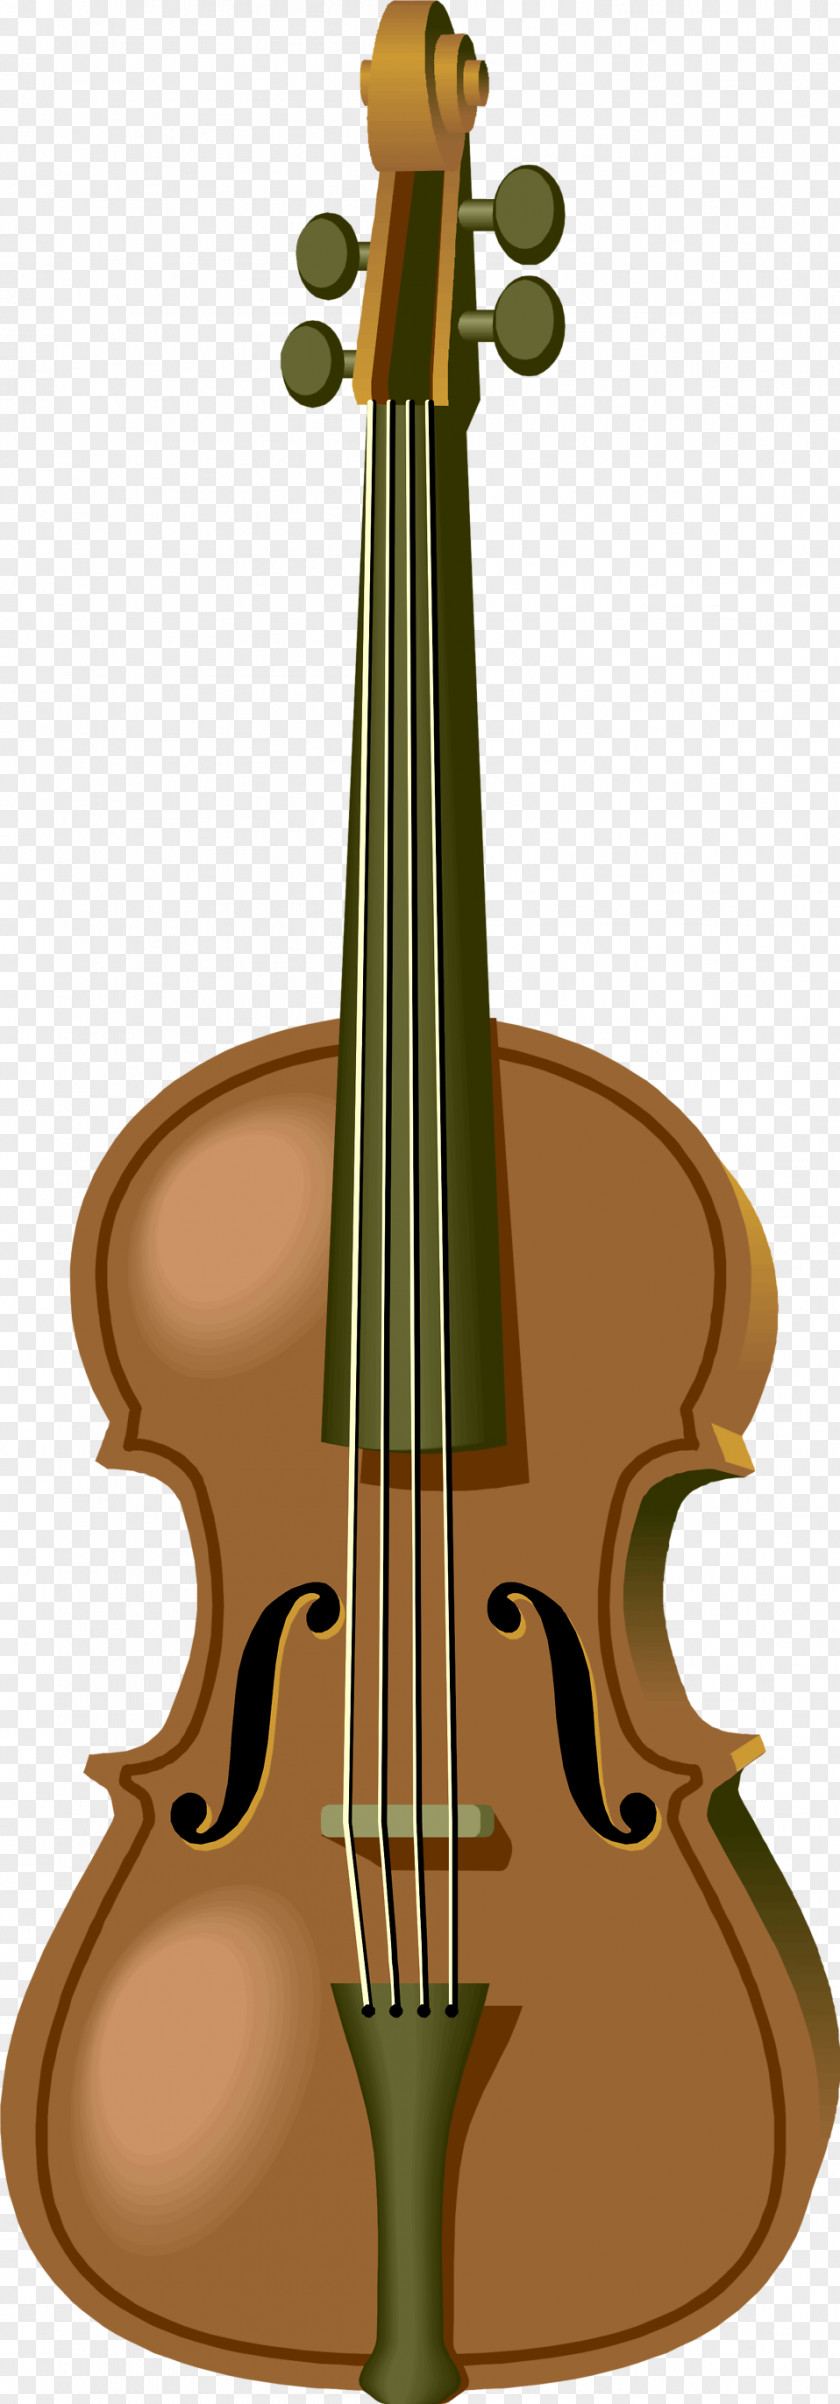 Violin Cello Musical Instruments Clip Art PNG